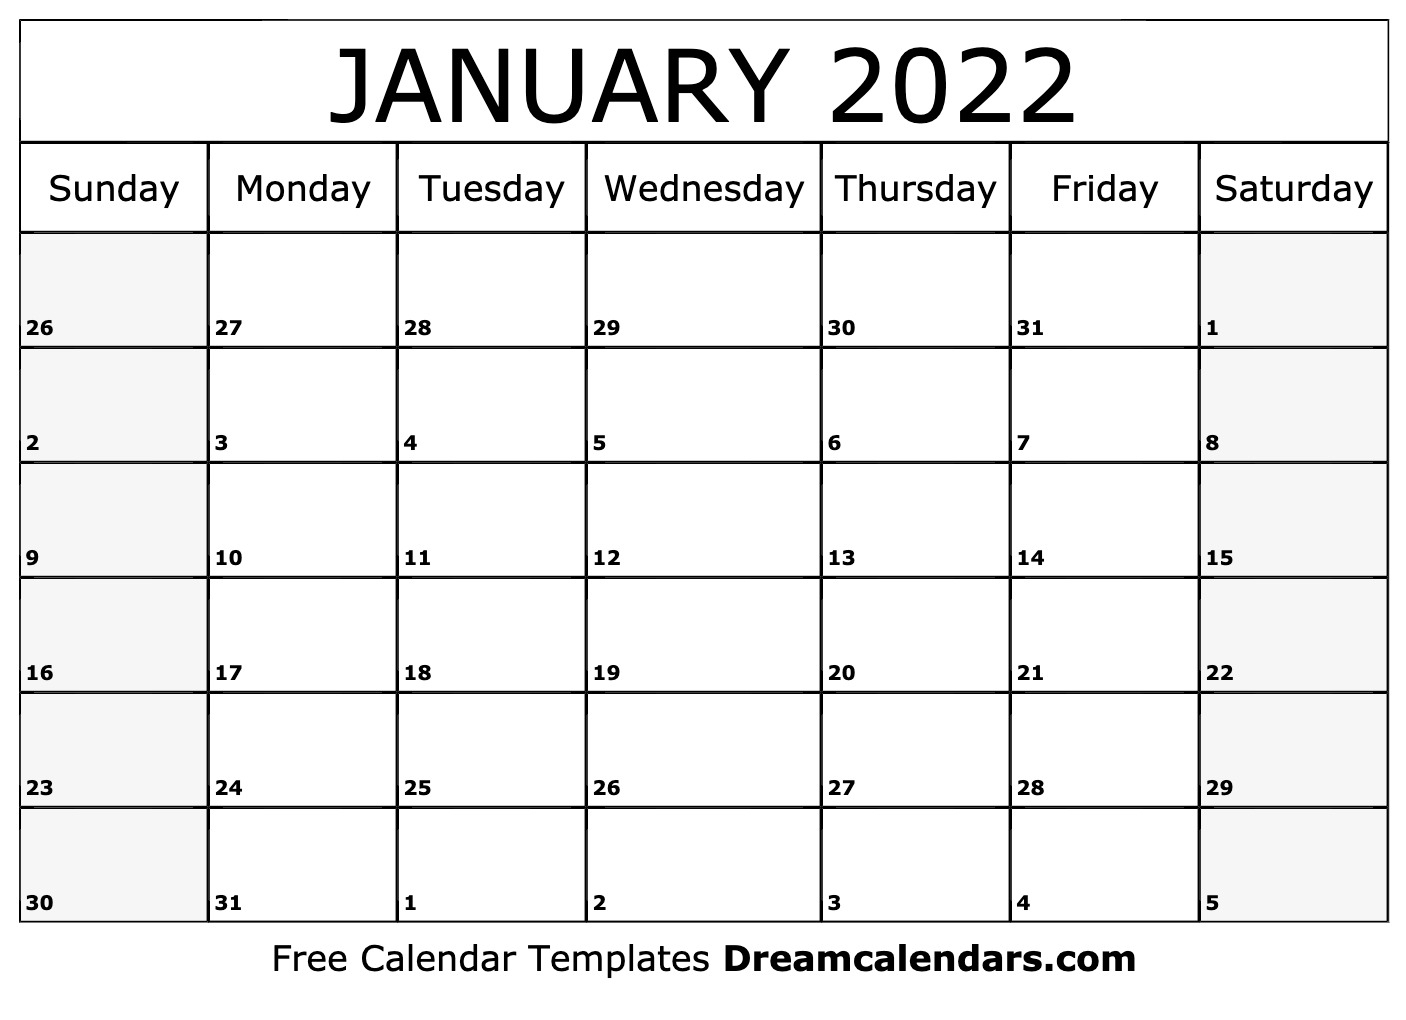 Get Calendar Of January 2022 With Holidays